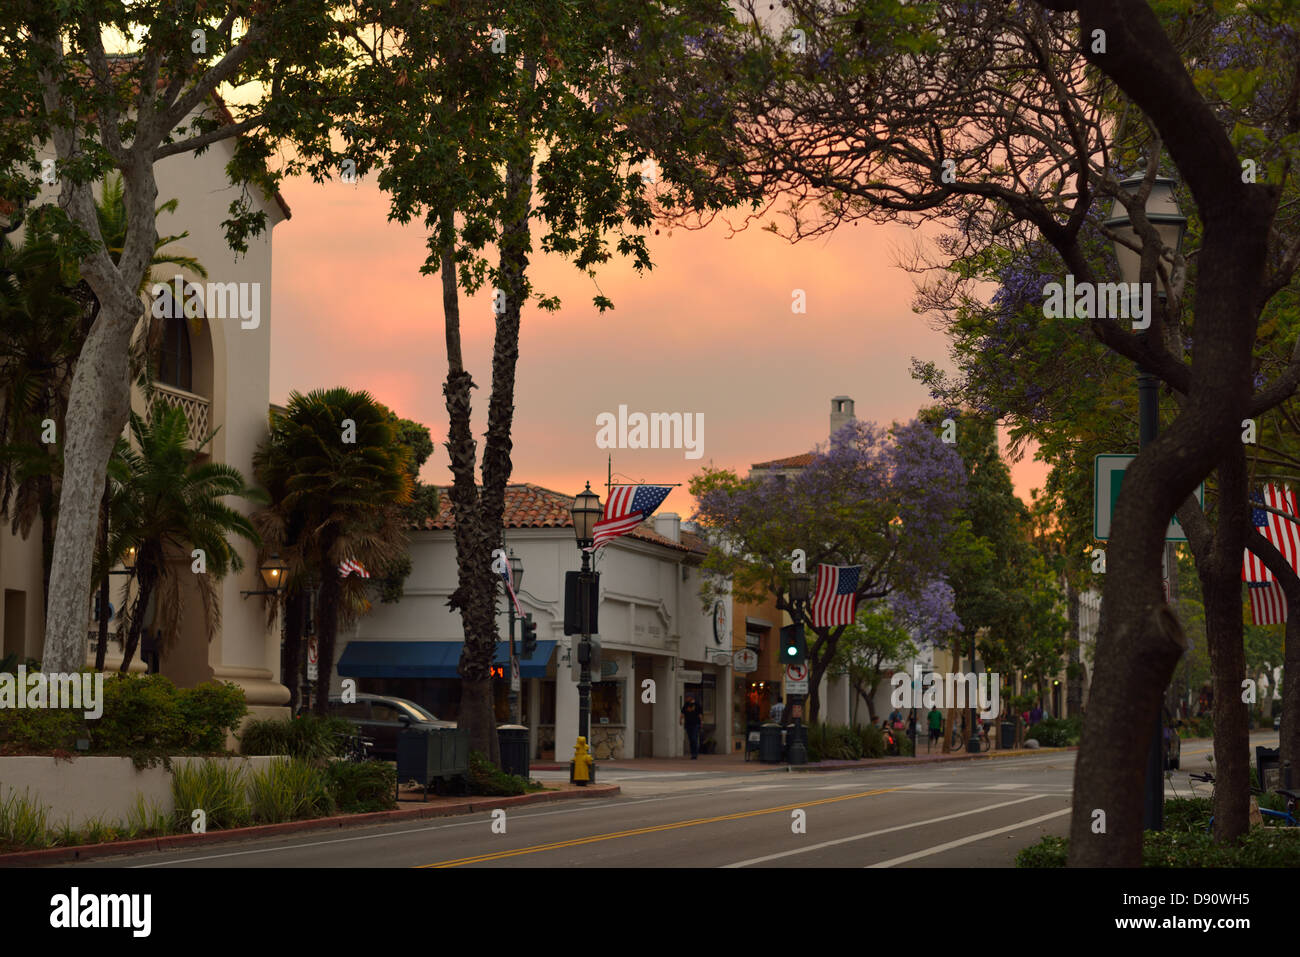 The State Street in downtown Santa Barbara, CA Stock Photo